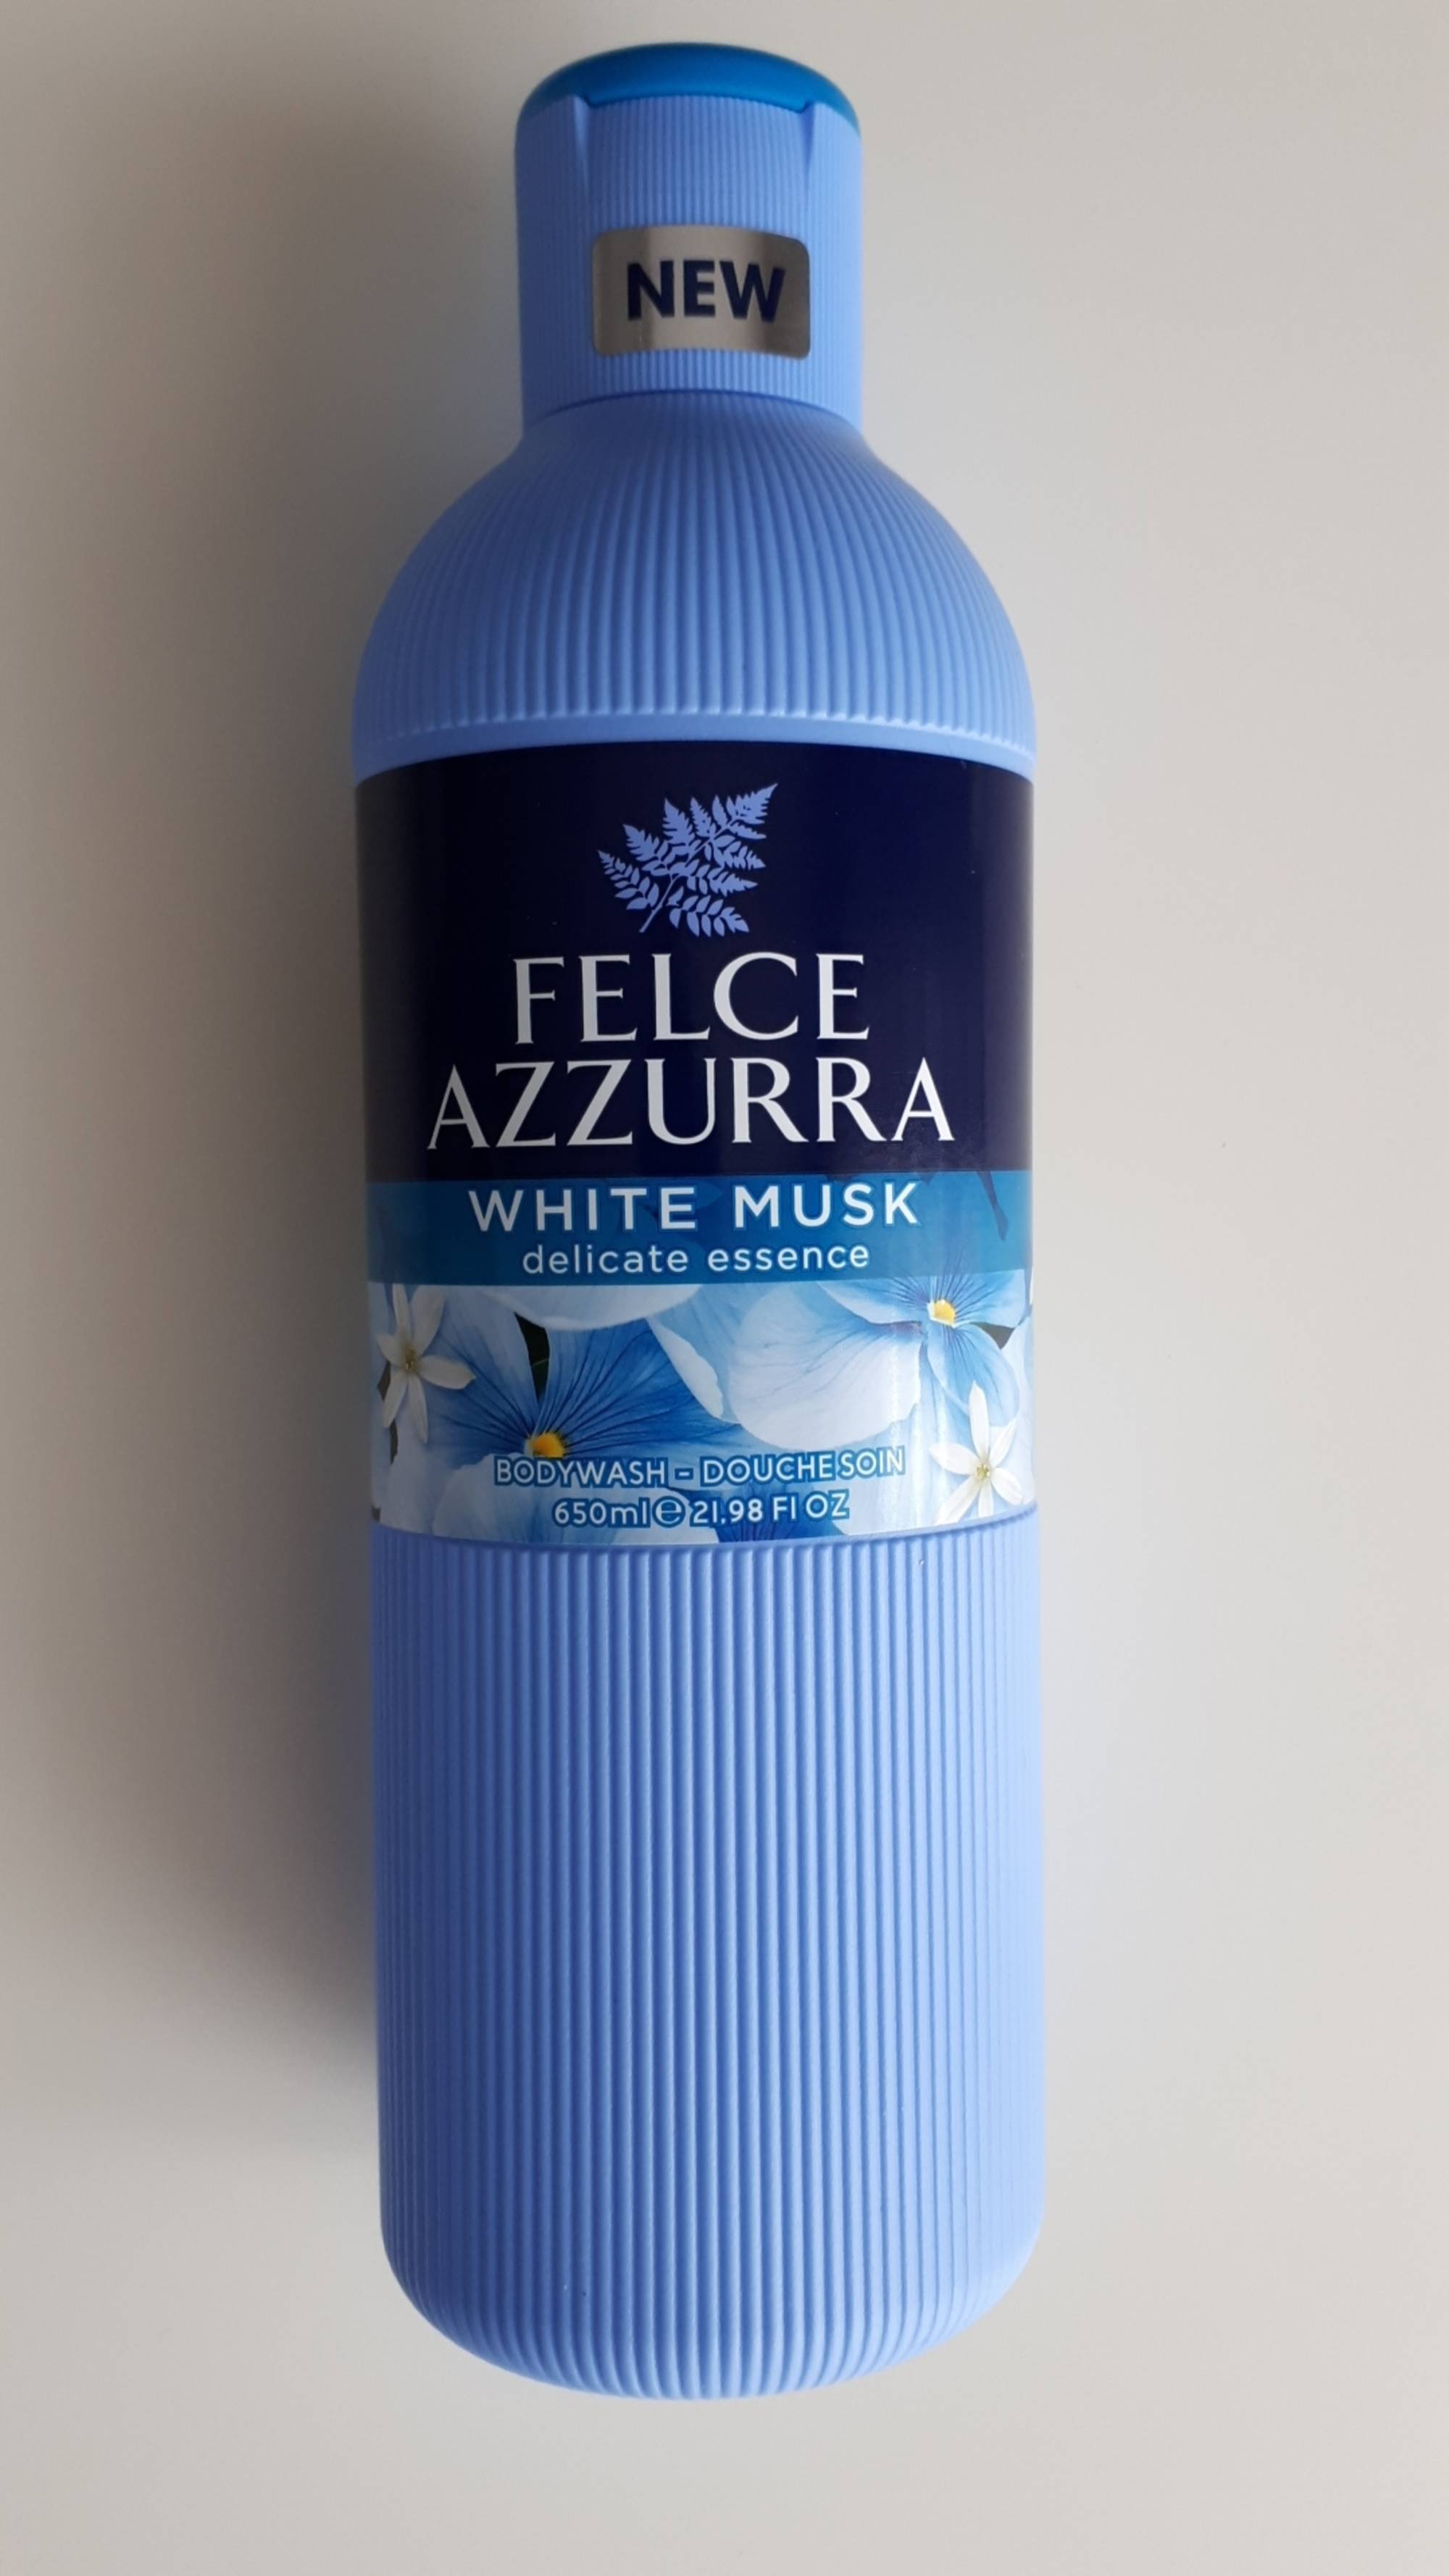 FELCE AZZURRA - White musk delicate essence - Douche soin